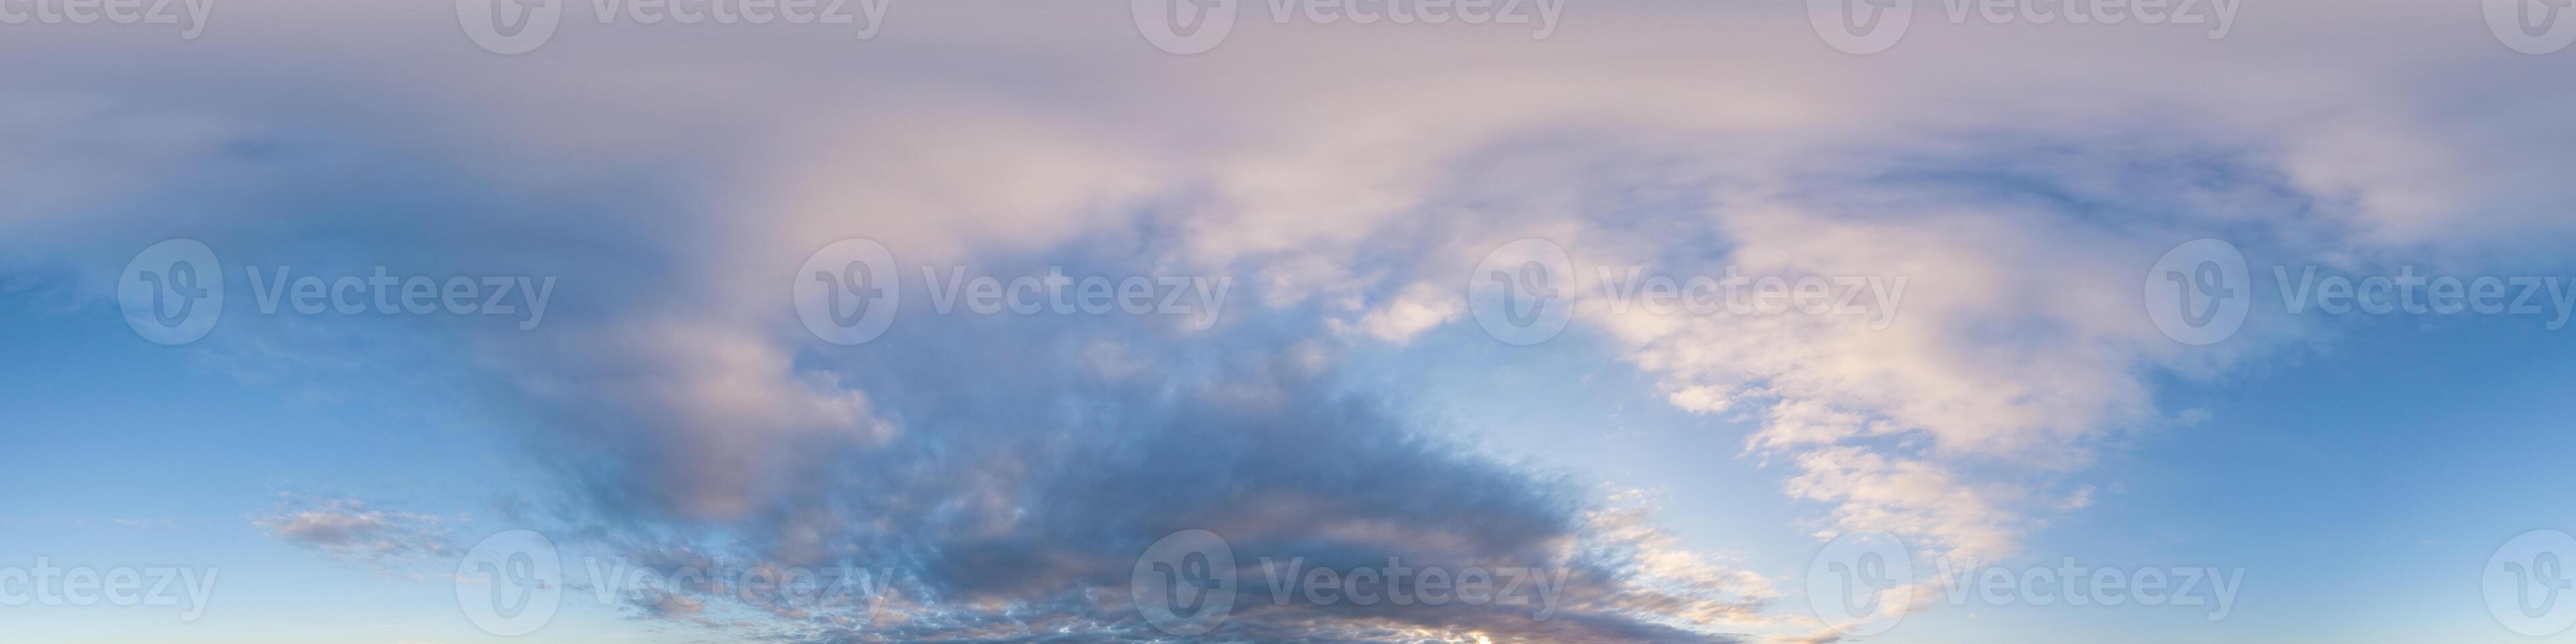 oscuro azul puesta de sol cielo panorama con rosado cúmulo nubes sin costura hdr 360 panorama en esférico equirrectangular formato. lleno cenit para 3d visualización, cielo reemplazo para aéreo zumbido panoramas. foto